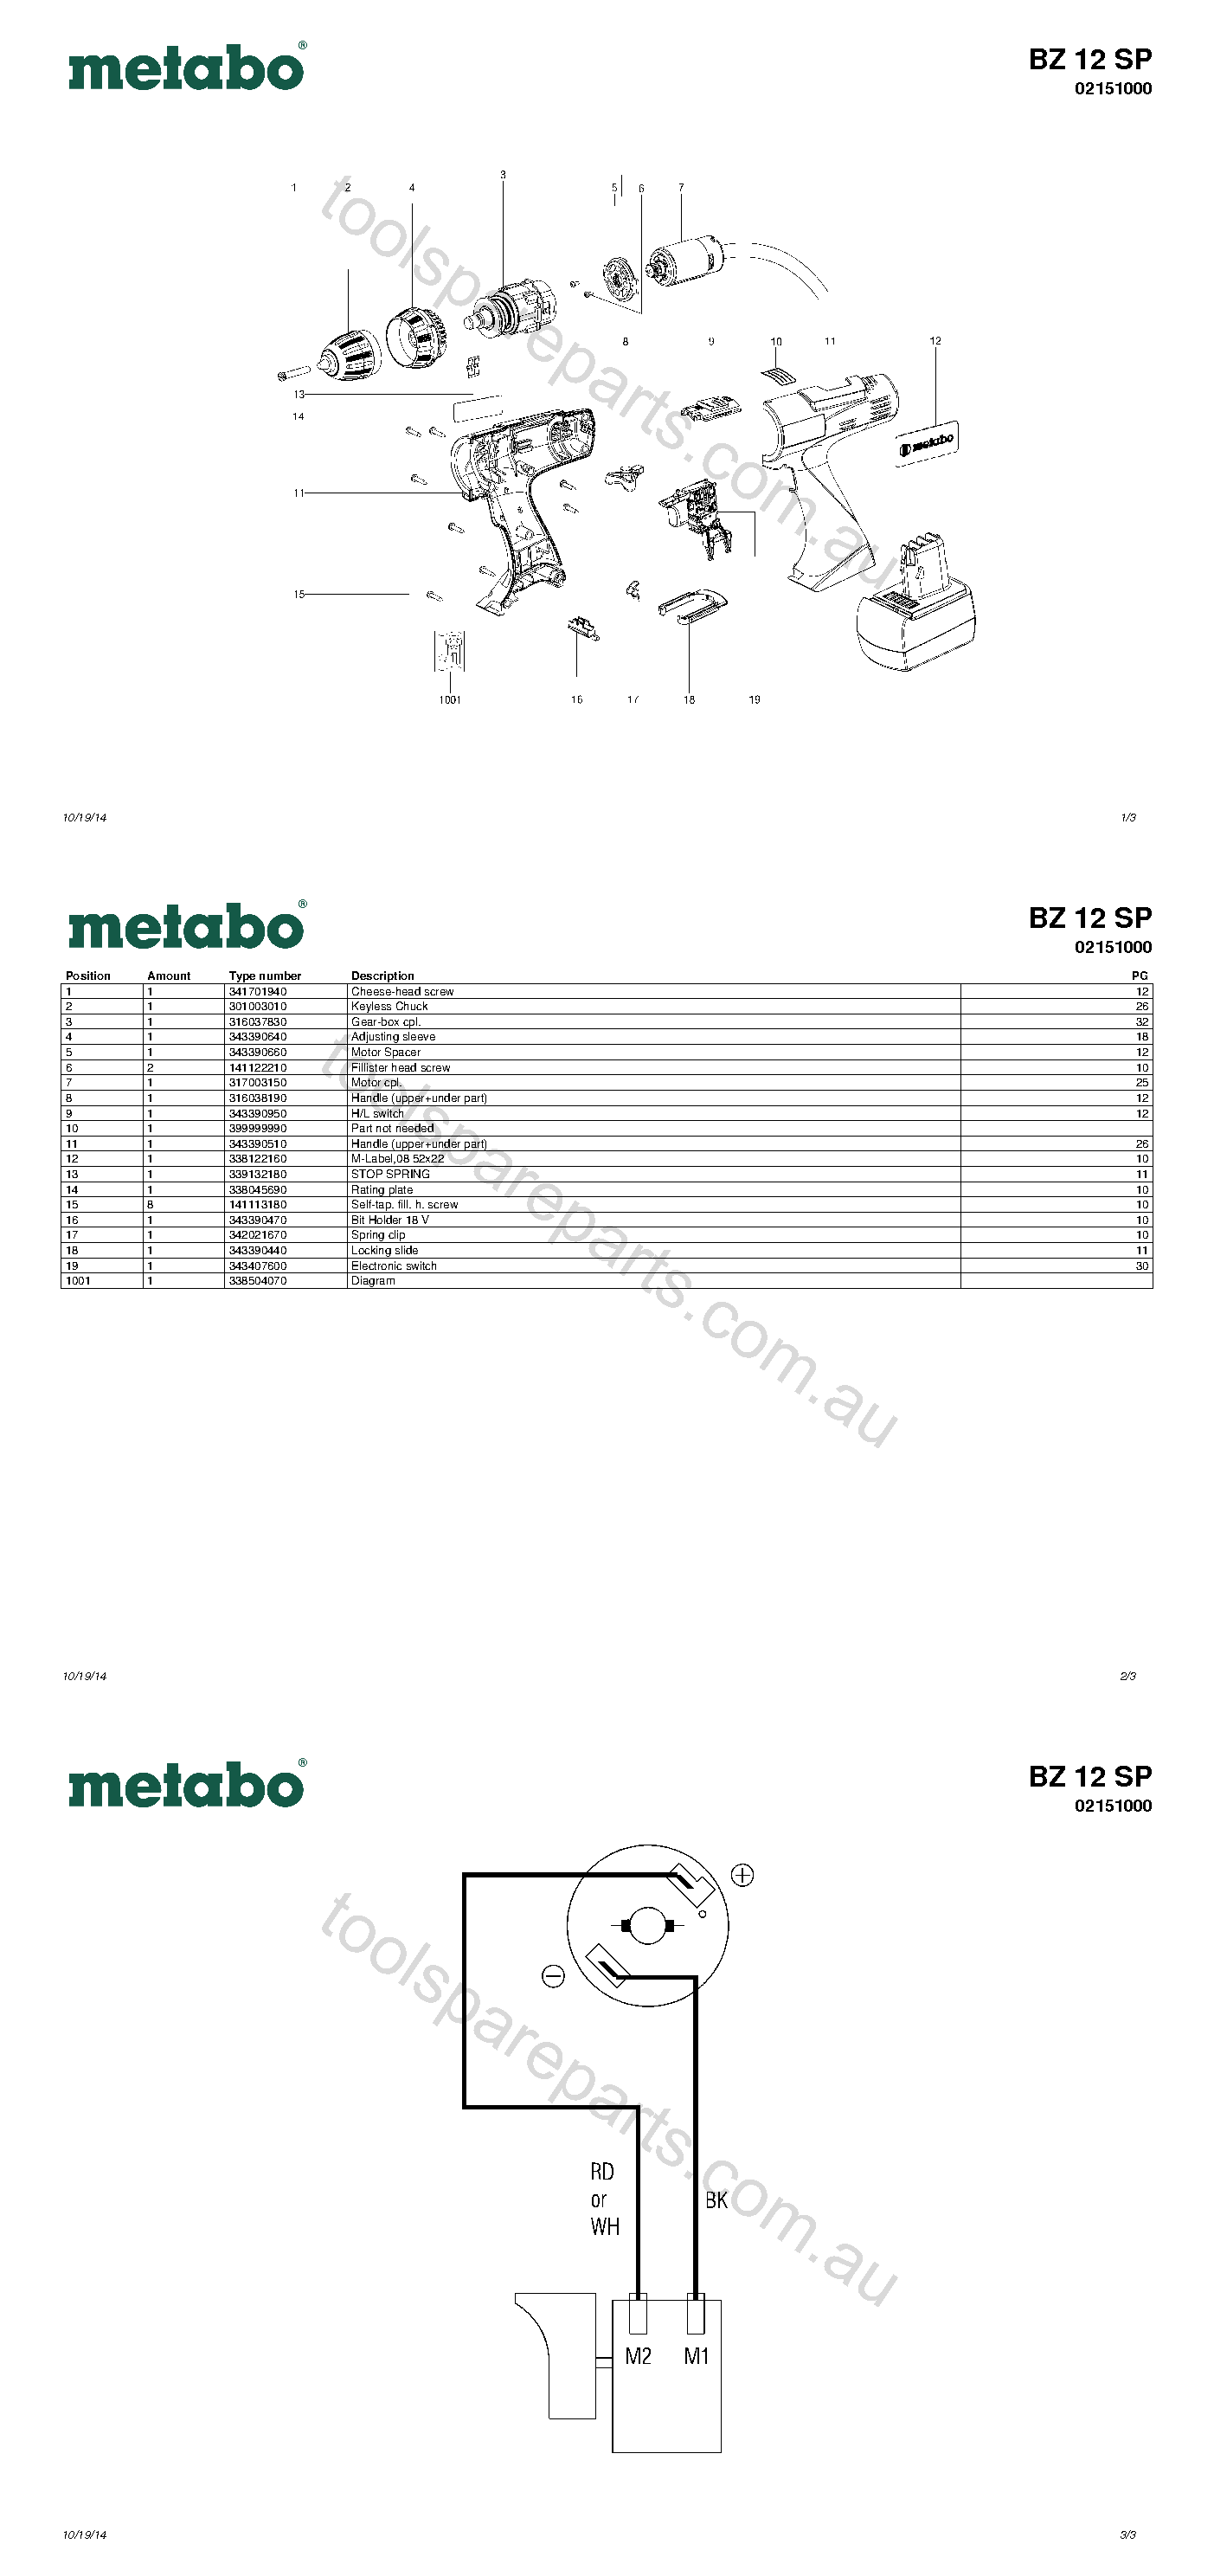 Metabo BZ 12 SP 02151000  Diagram 1